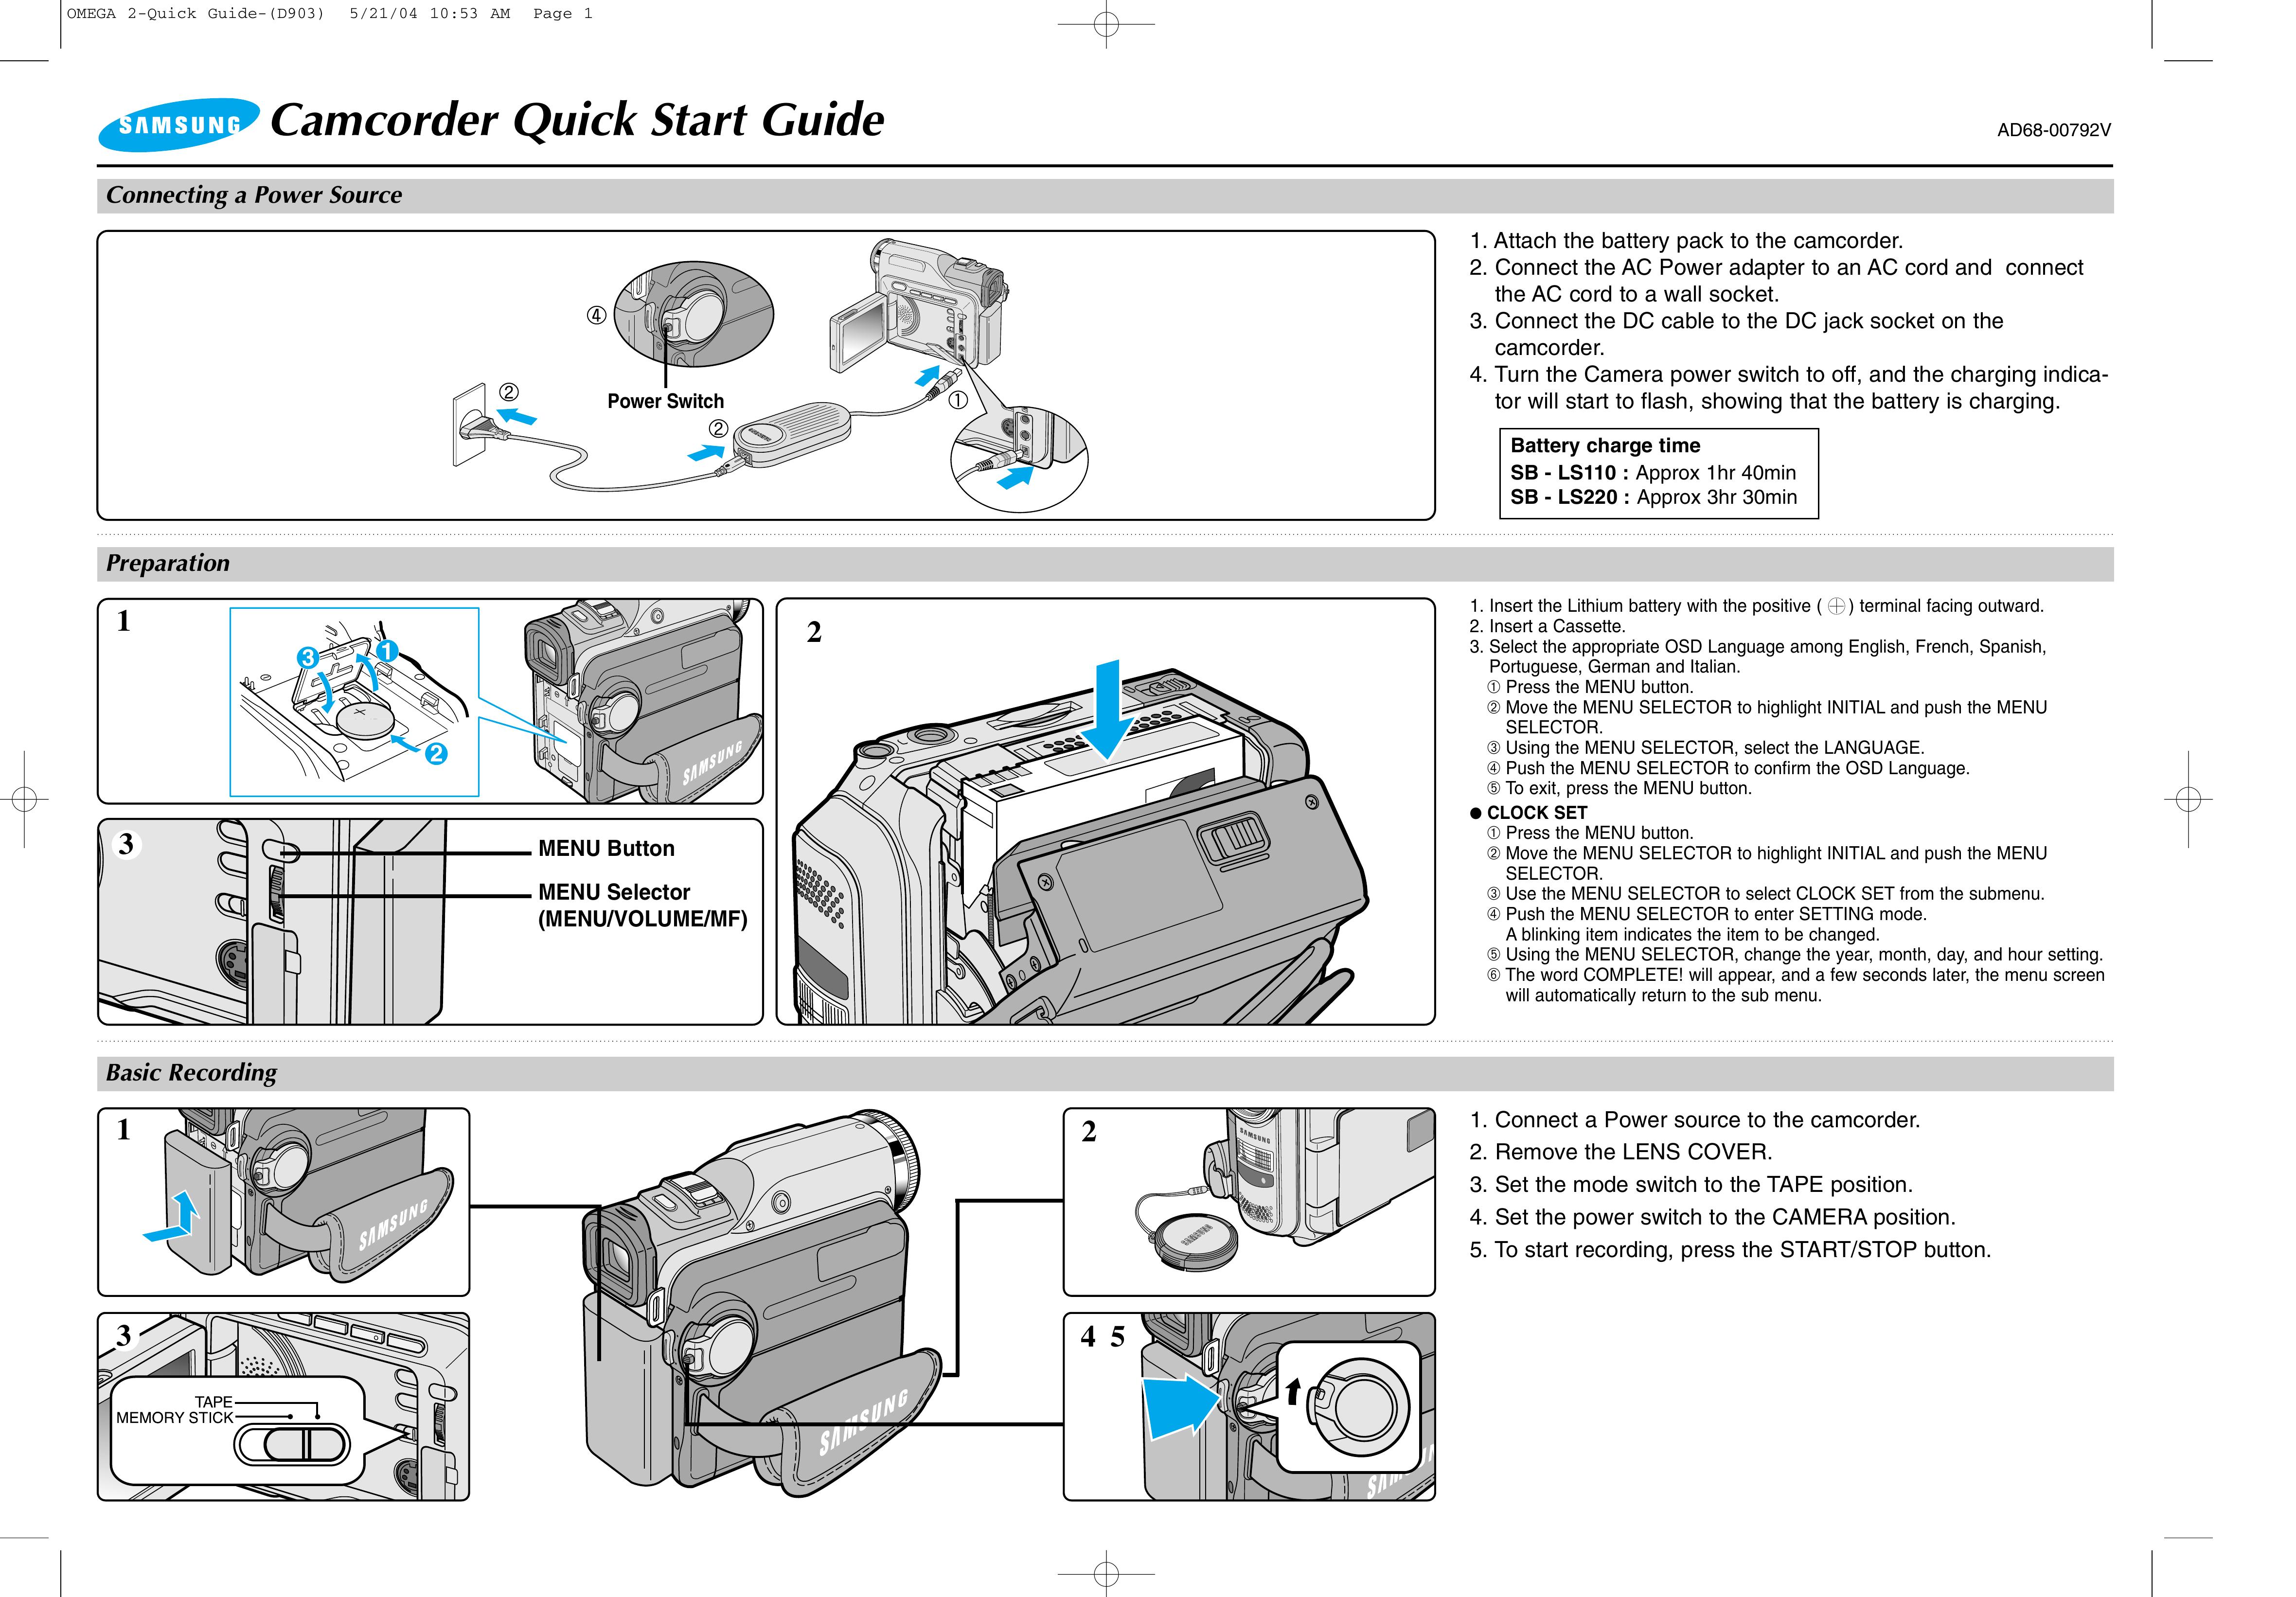 Samsung AD68-00792V Camcorder User Manual